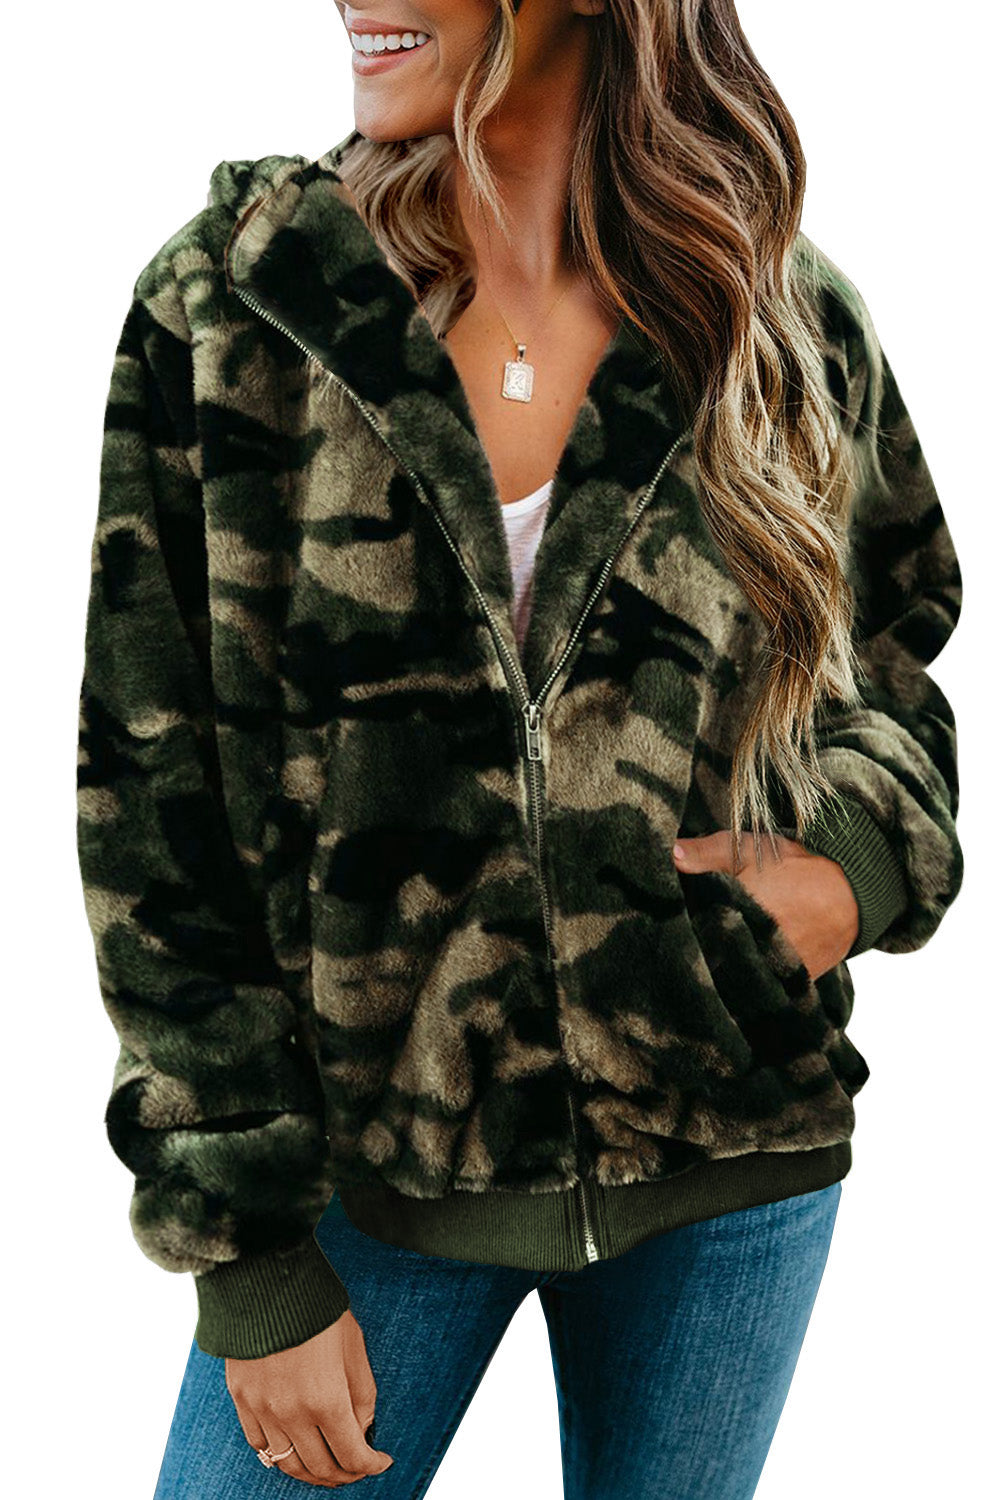 Womens Jacket Camouflage Pattern Fleece Zip Up Hoodie Coat with Pockets